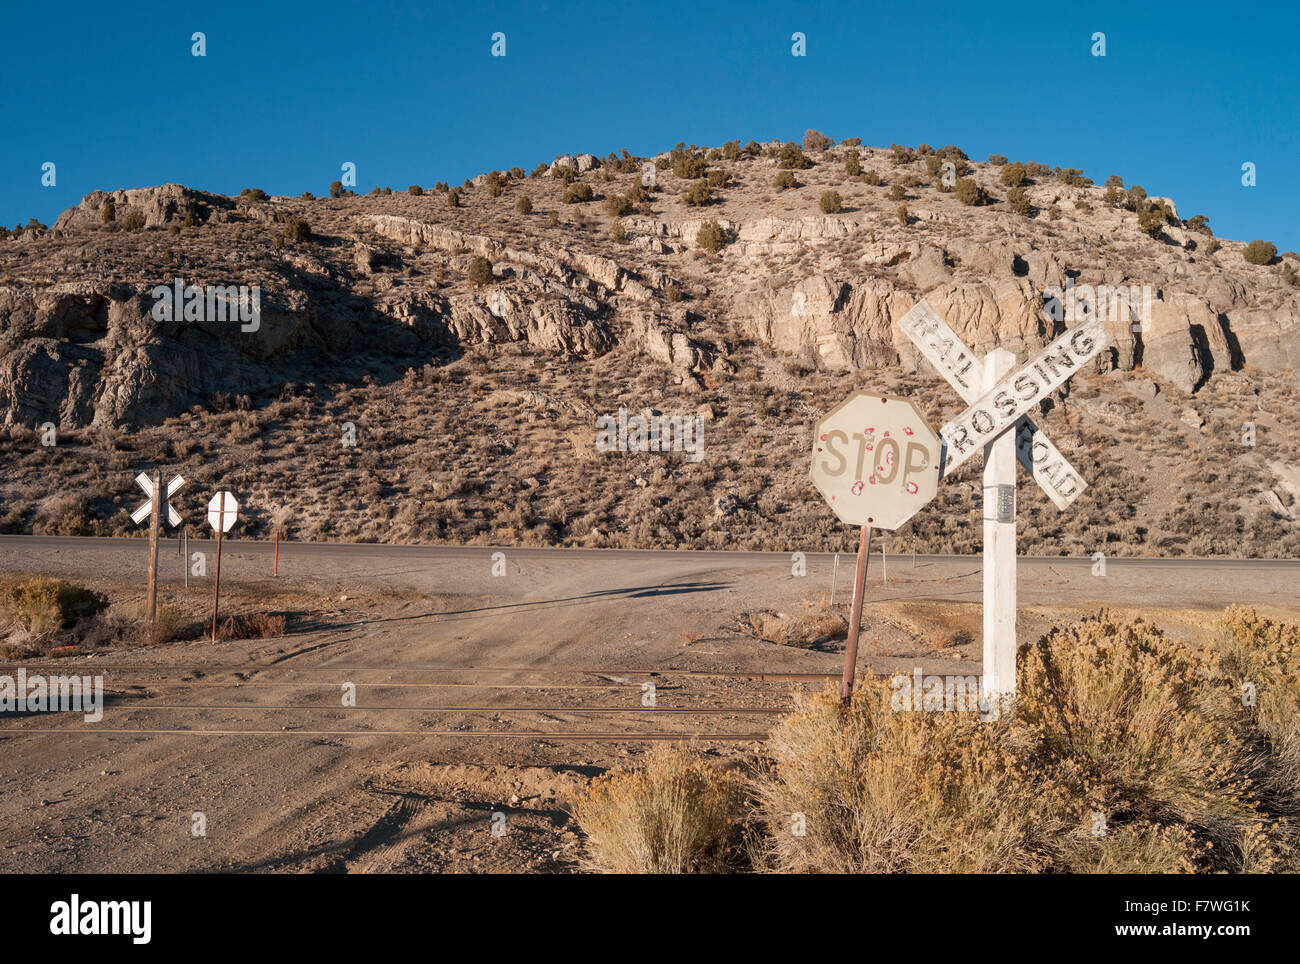 United States, Nevada, Railroad crossing Stock Photo